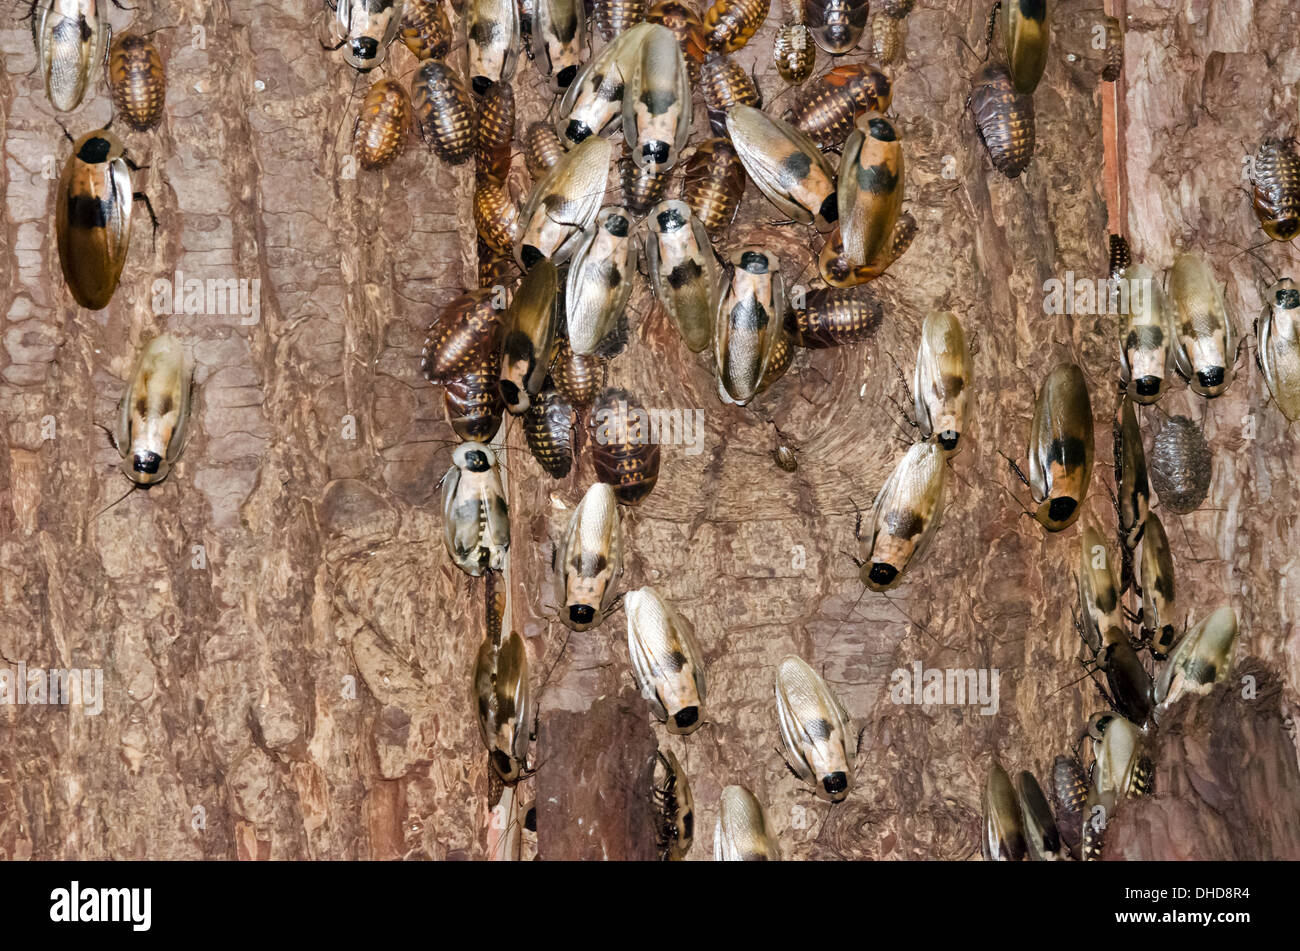 Cucarachas en corteza de árbol Foto de stock